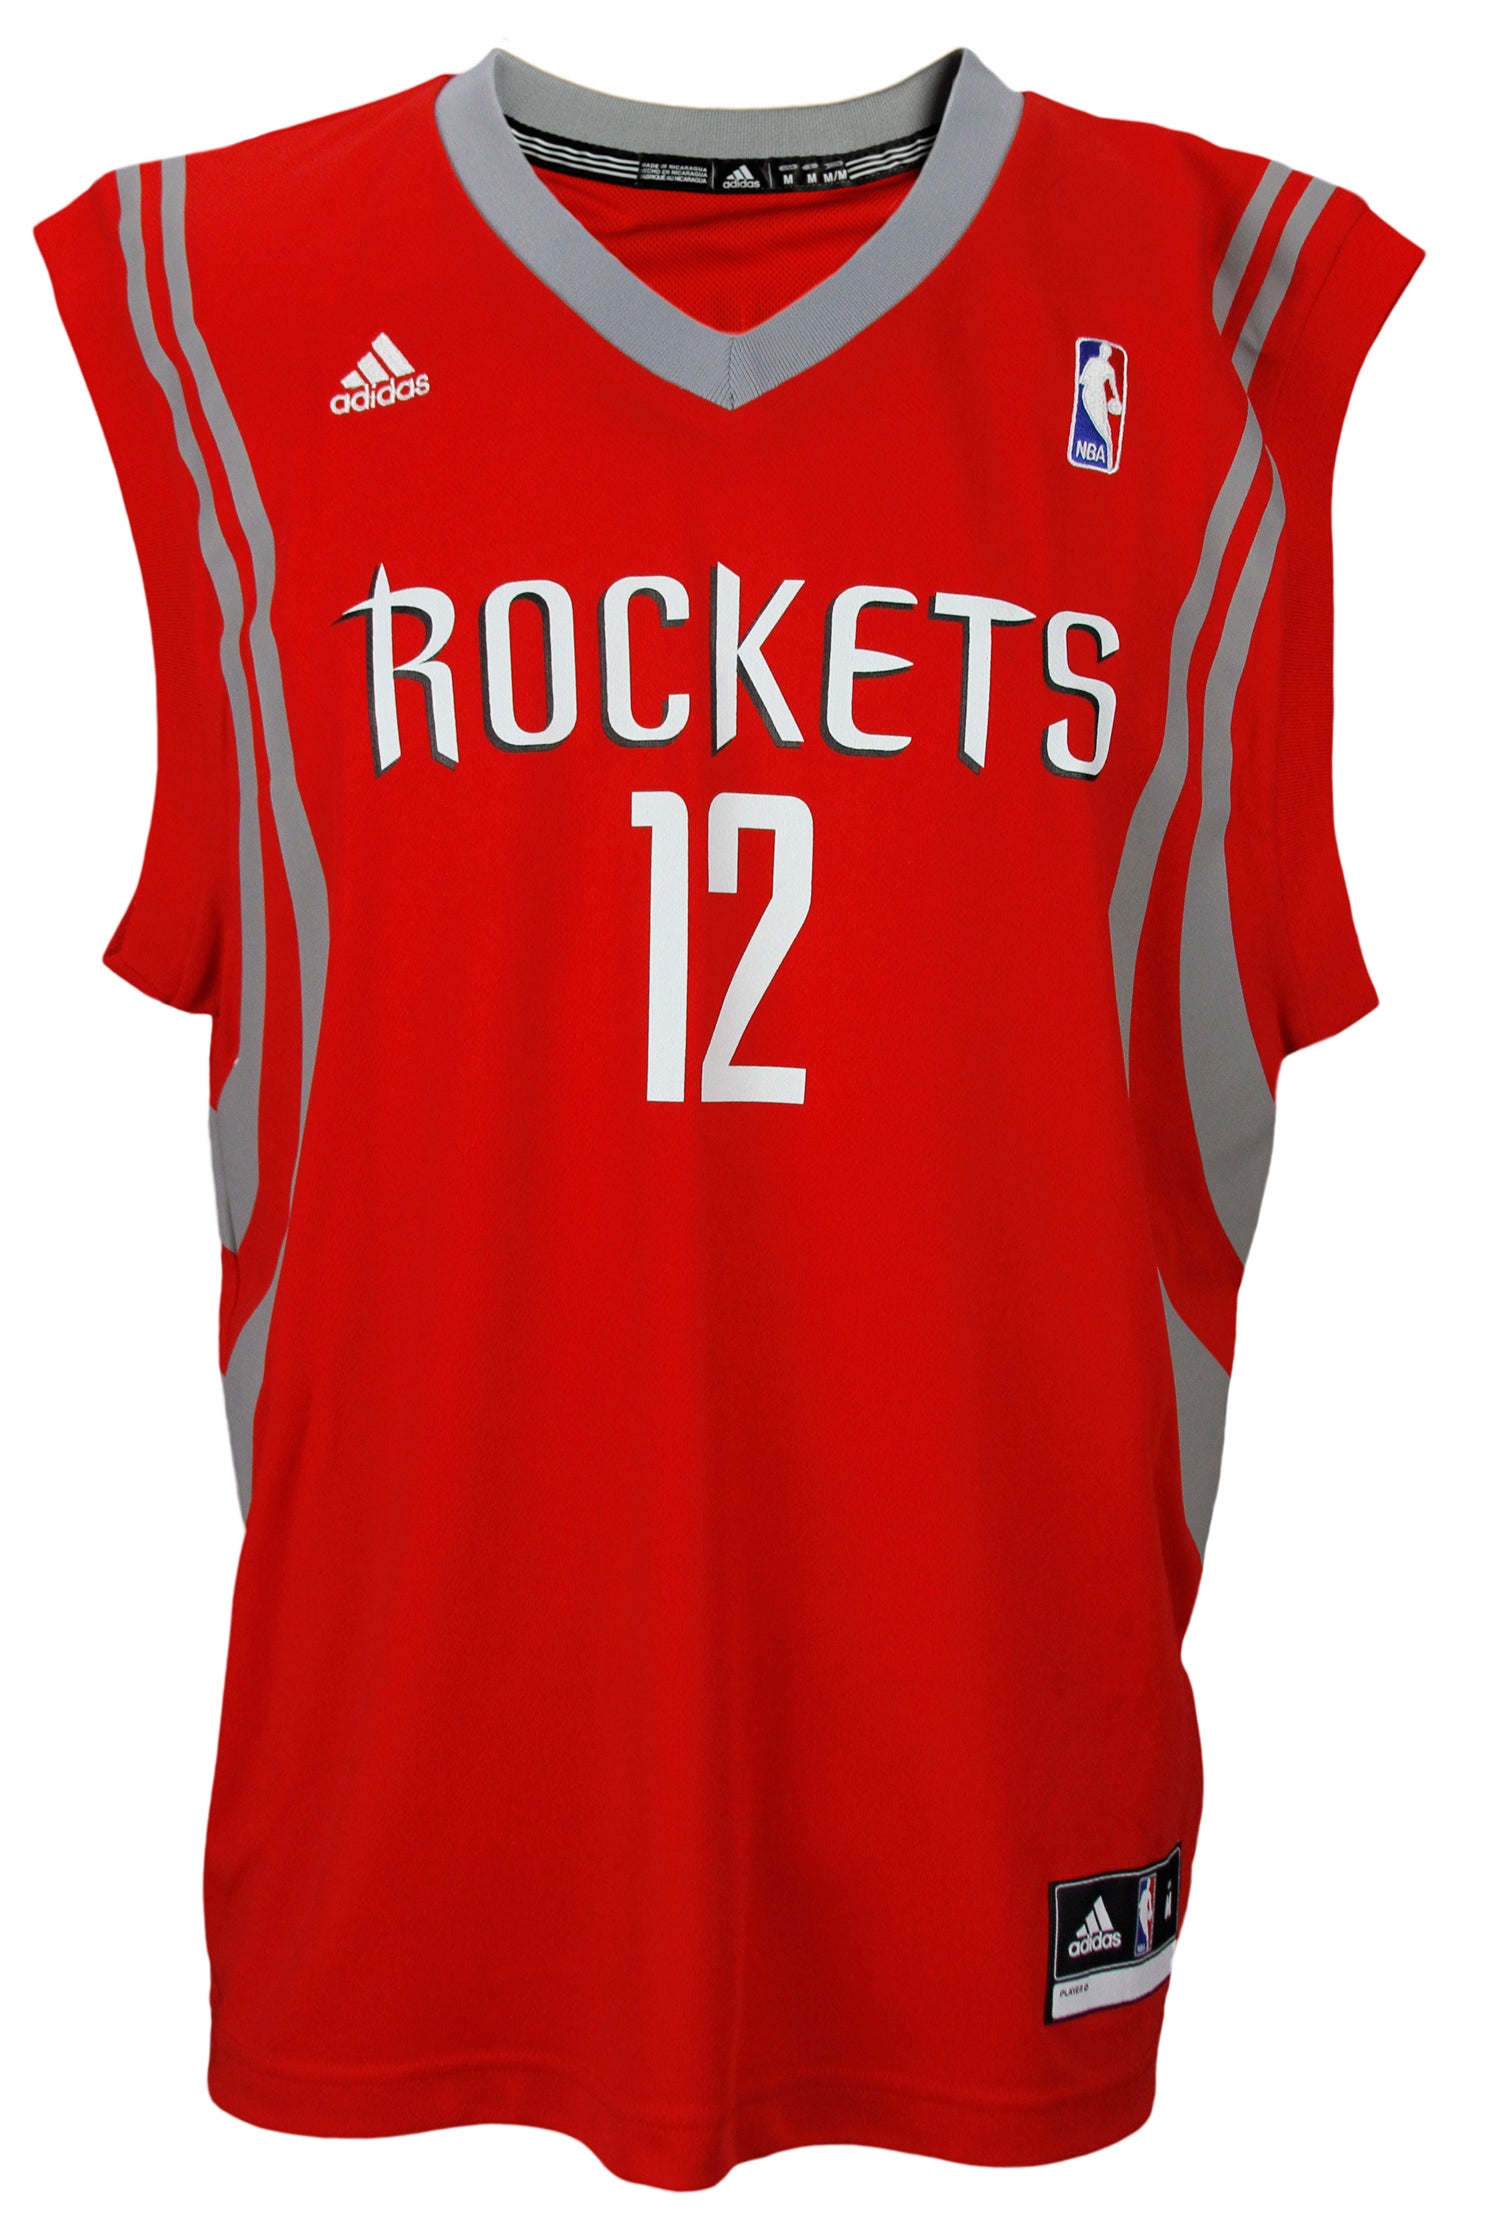 Rockets red jersey